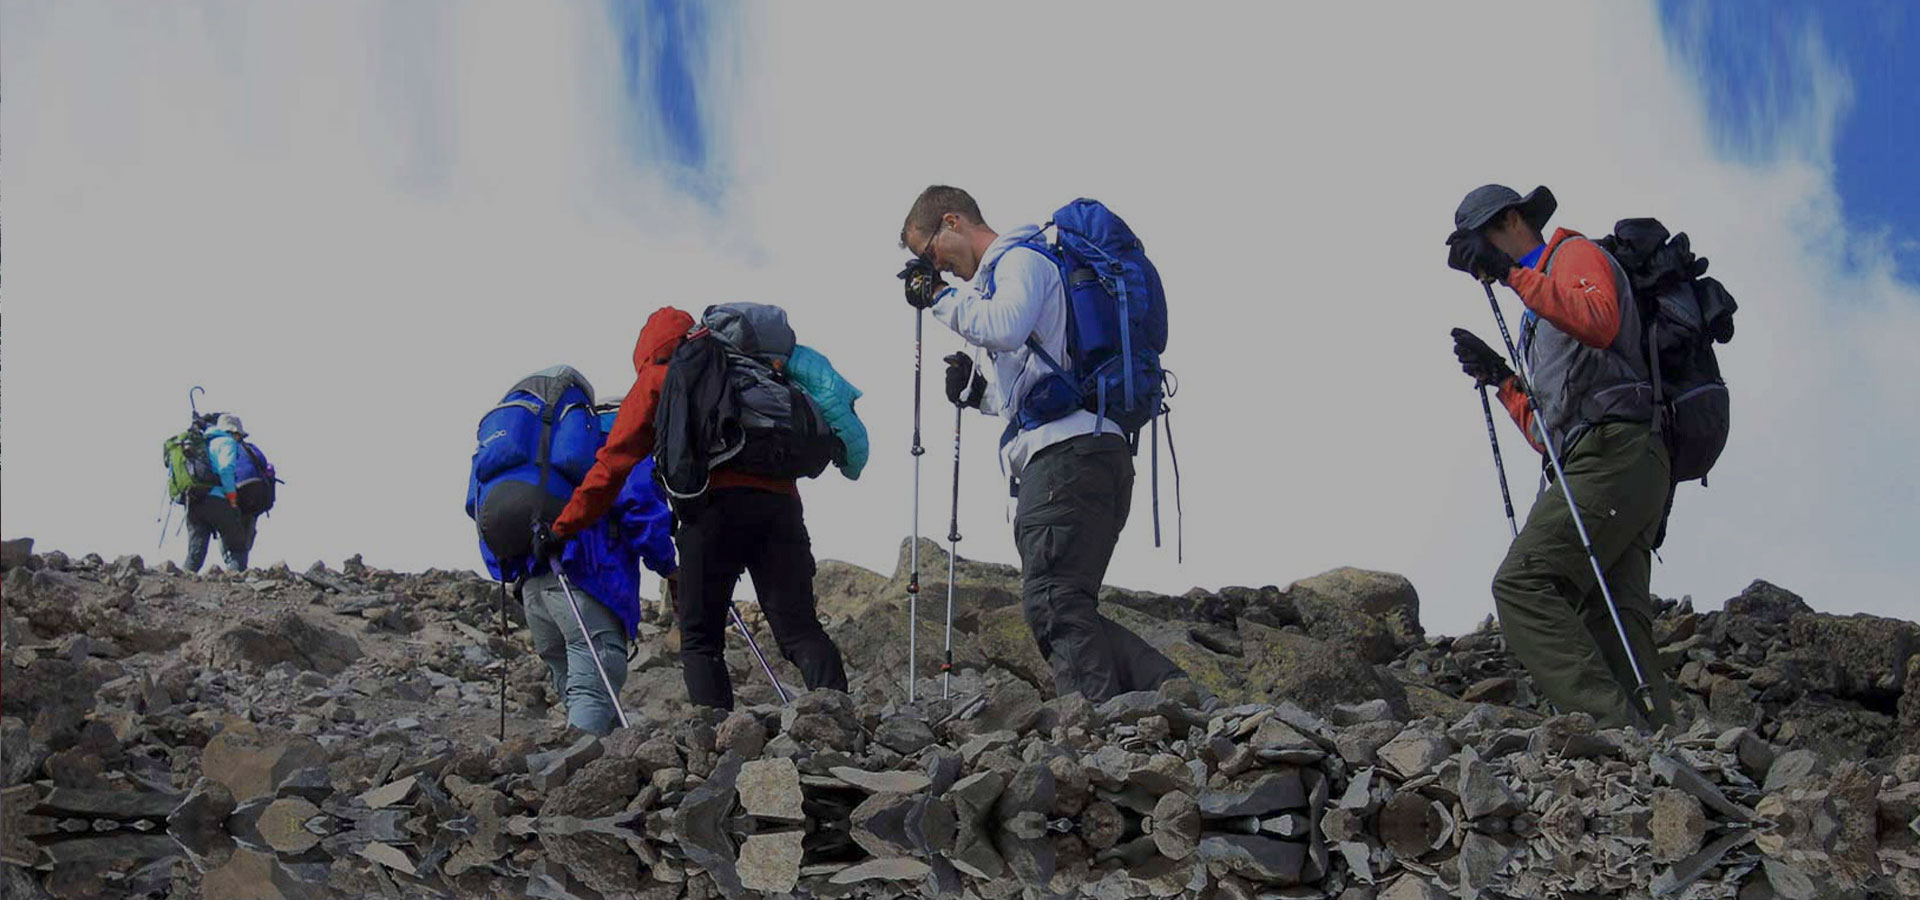 Climb Kilimanjaro Guide